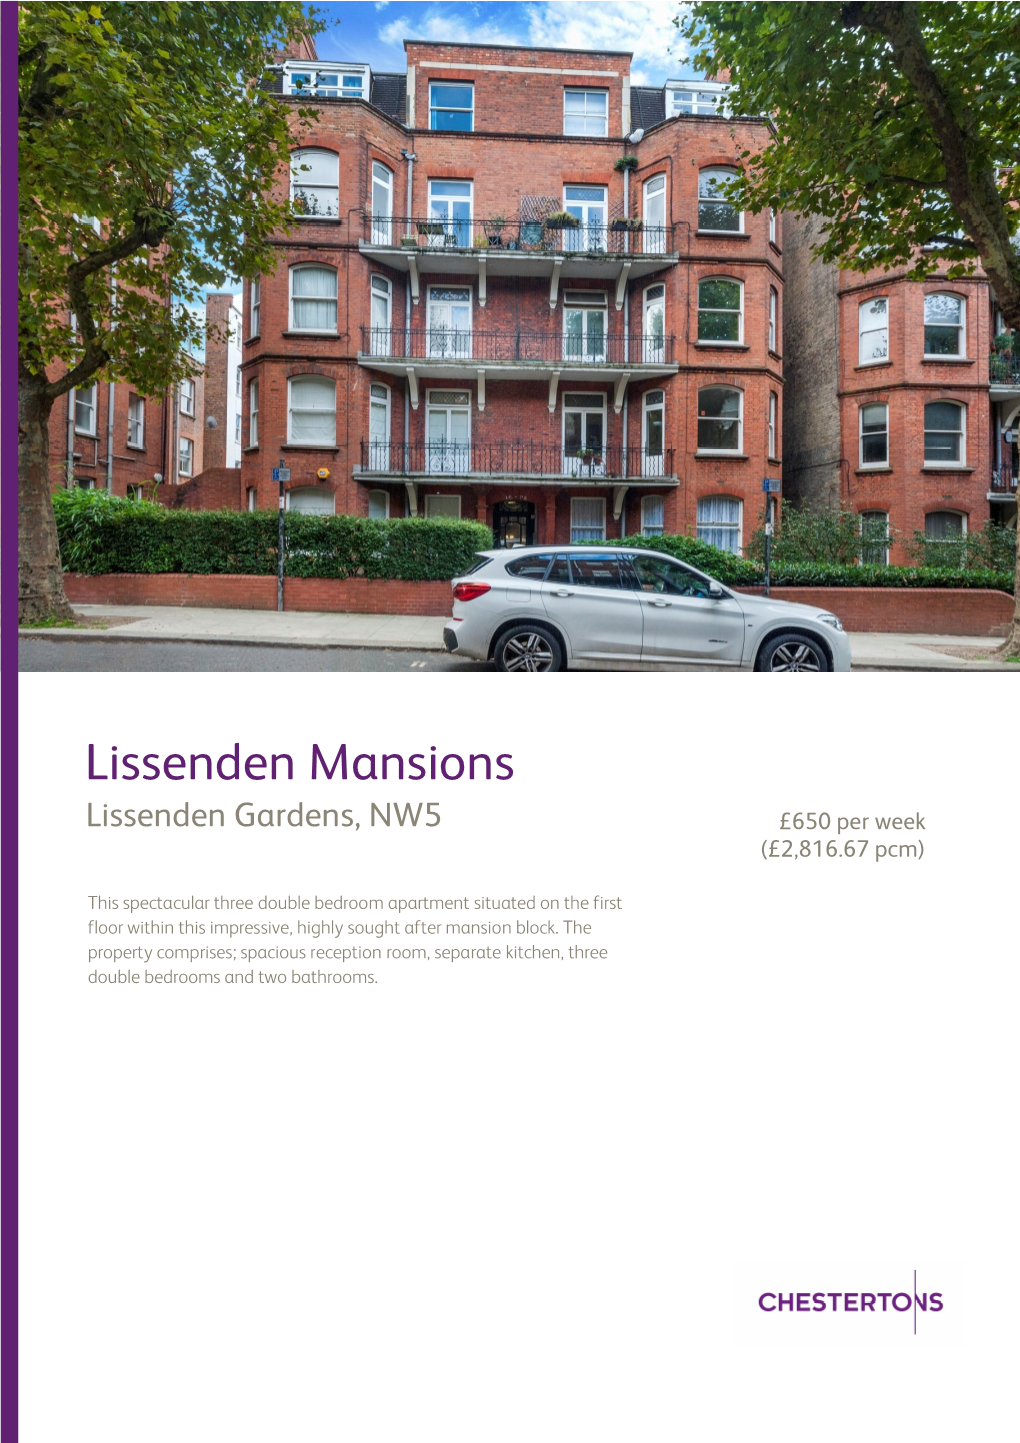 Lissenden Mansions